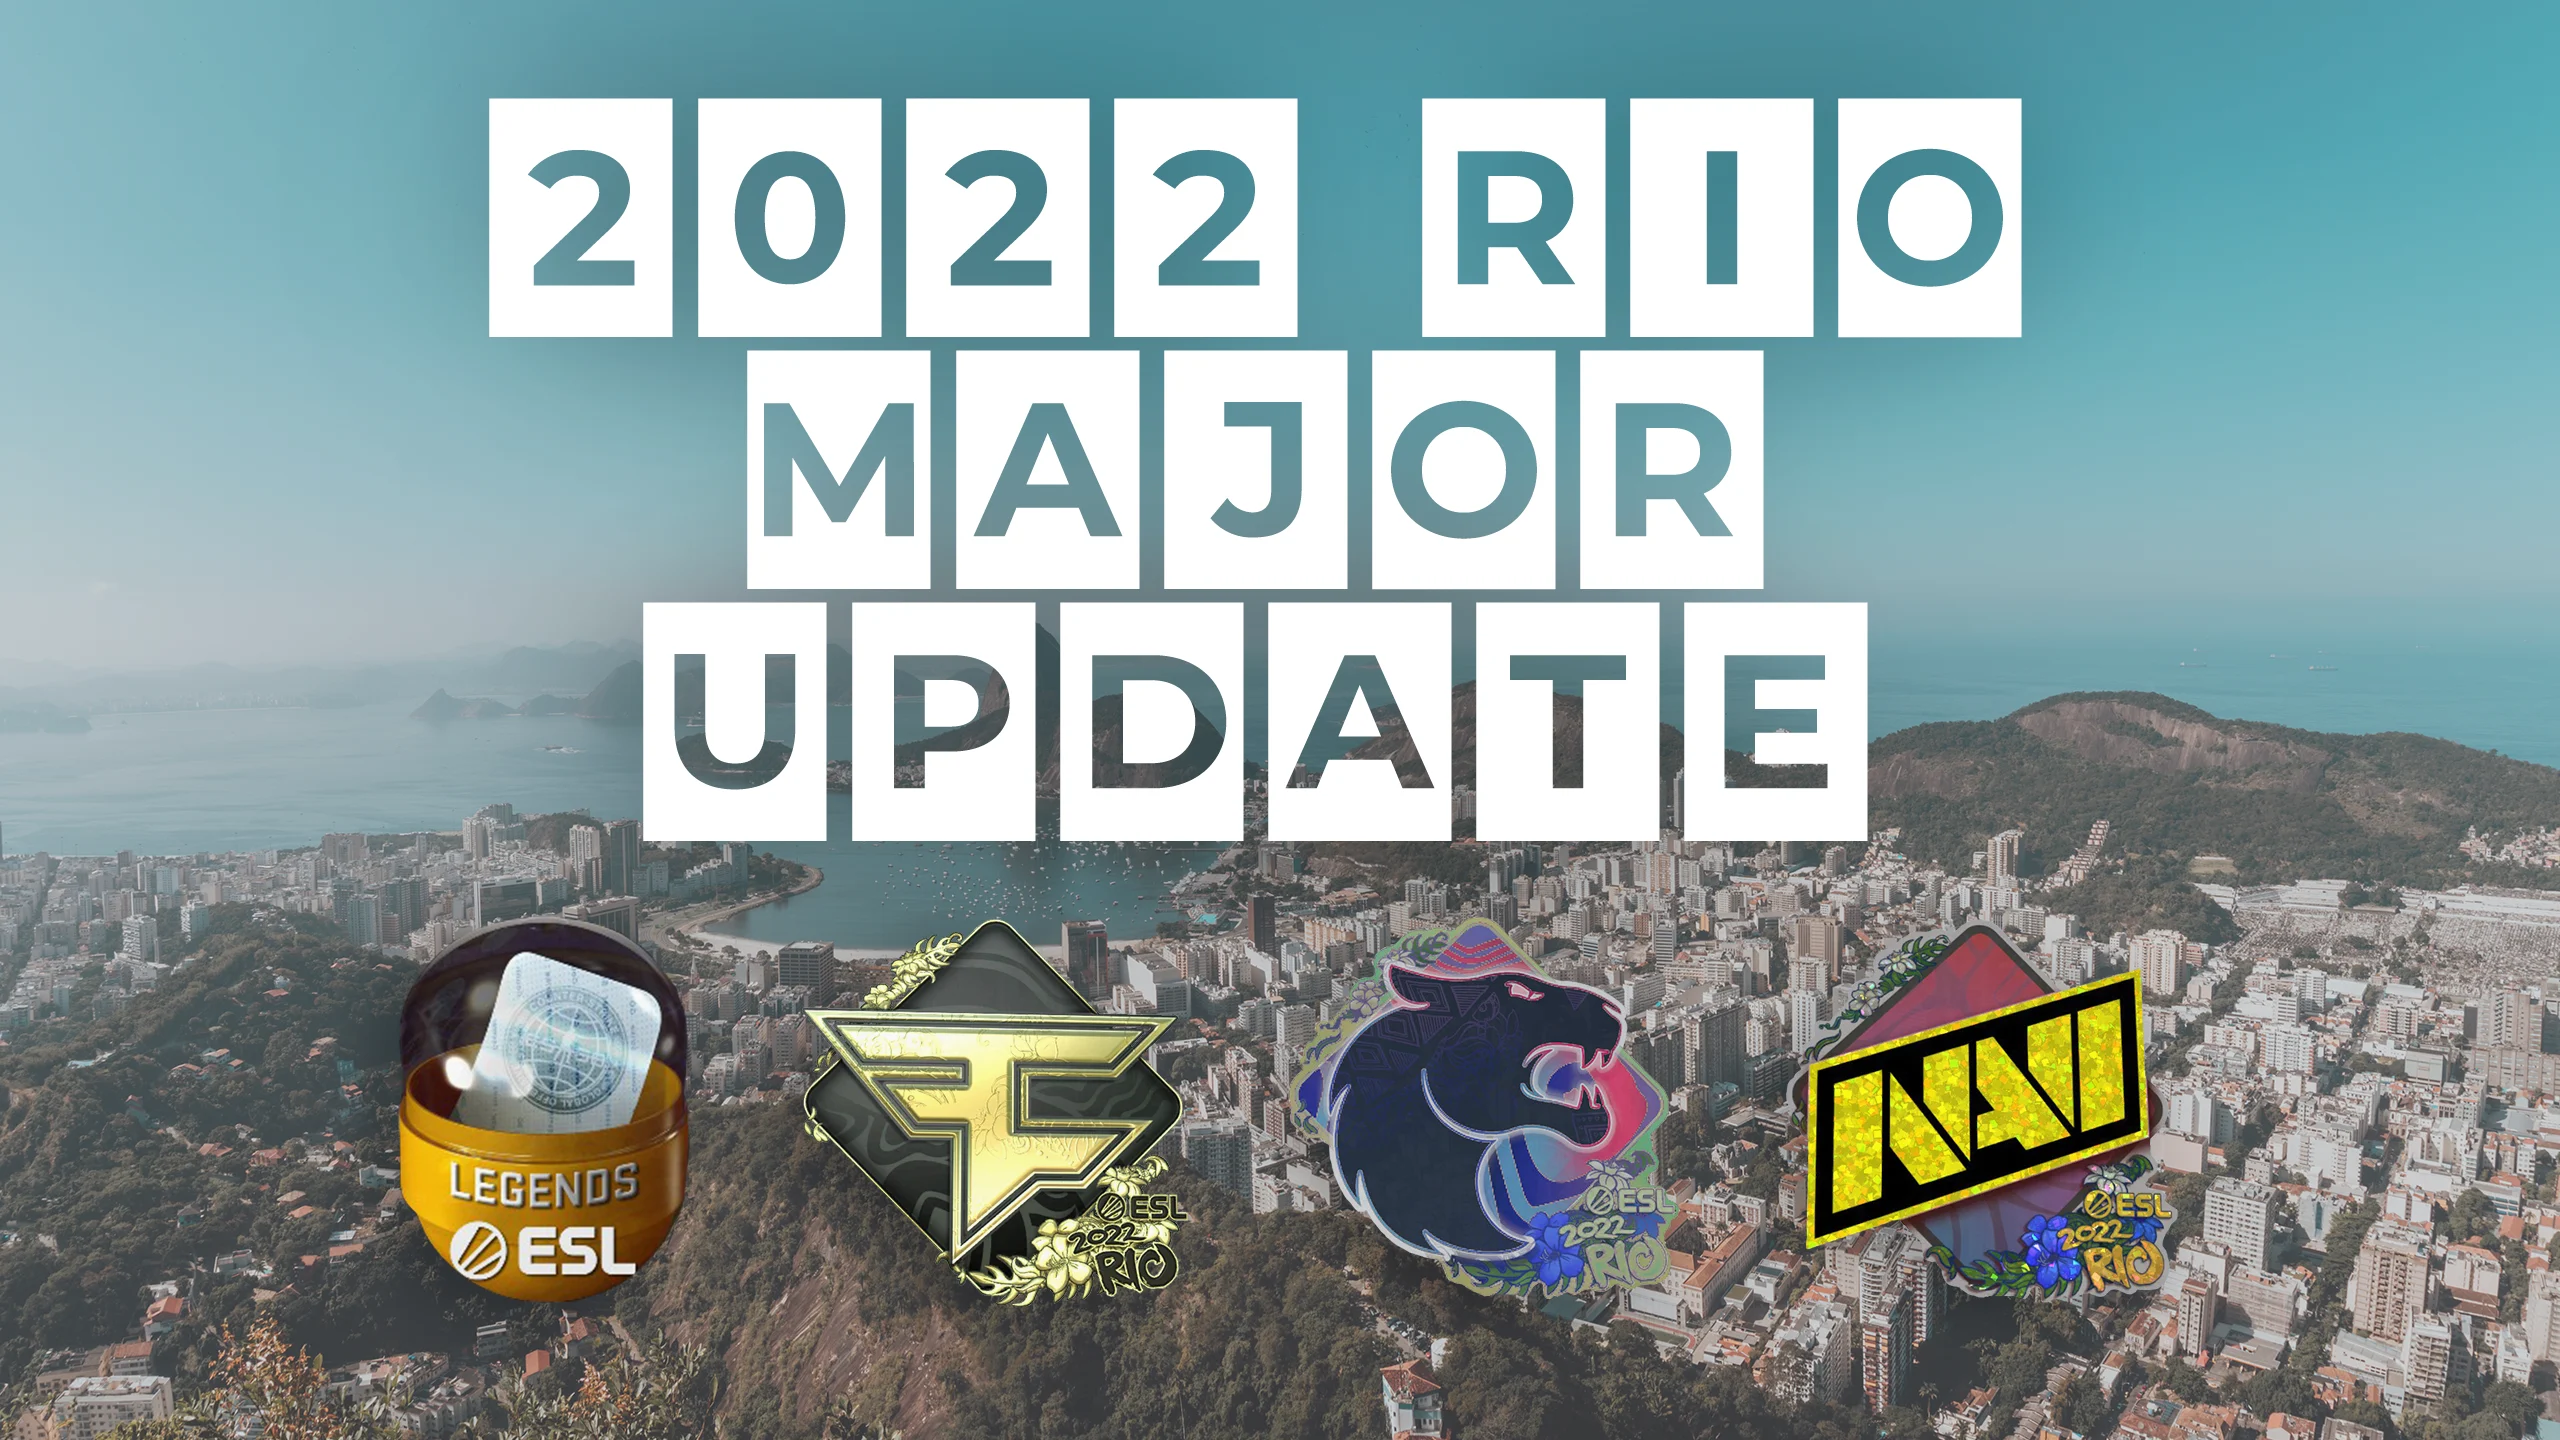 2022 Rio Major Update